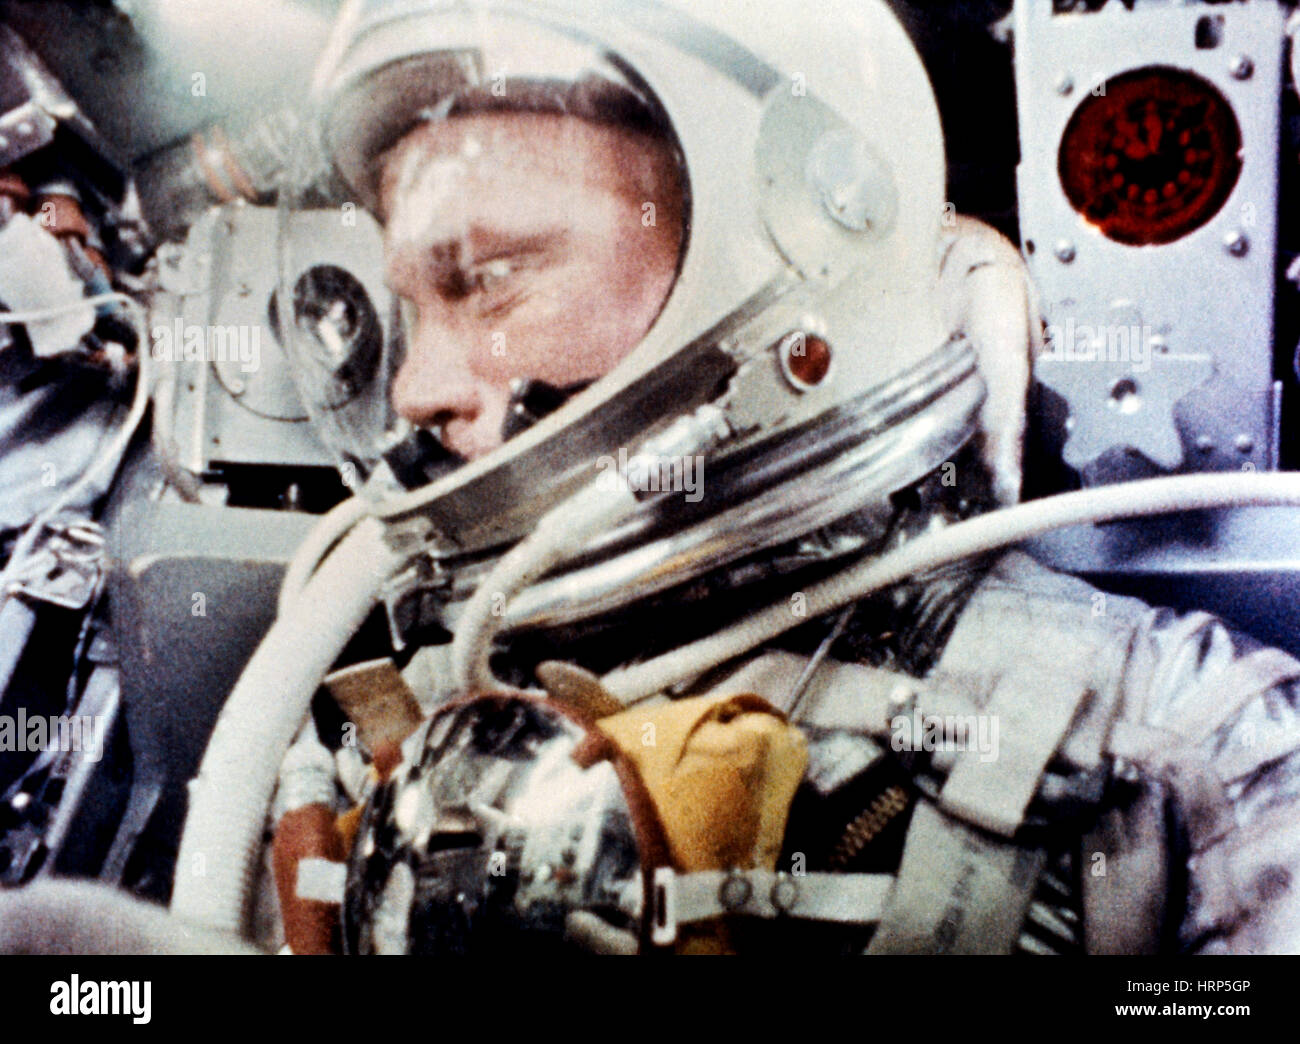 Astronaut John Glenn Orbiting the Earth, 1962 Stock Photo